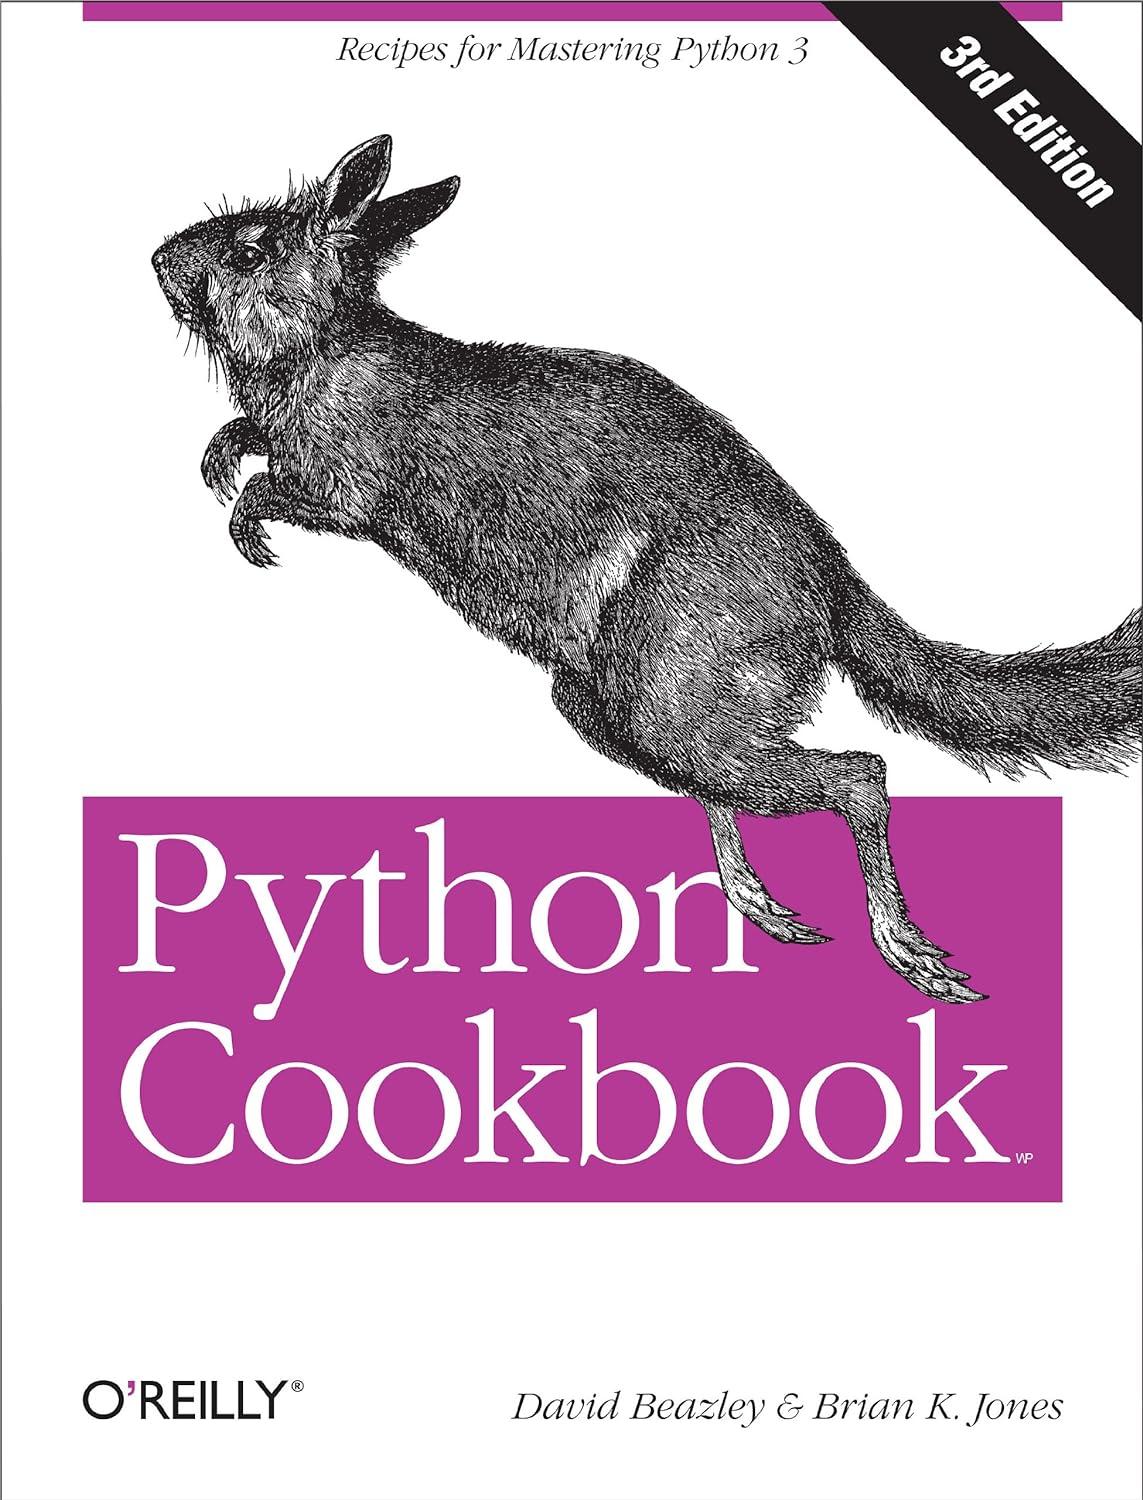 python cookbook 3rd edition david beazley, brian jones 1449340377, 978-1449340377